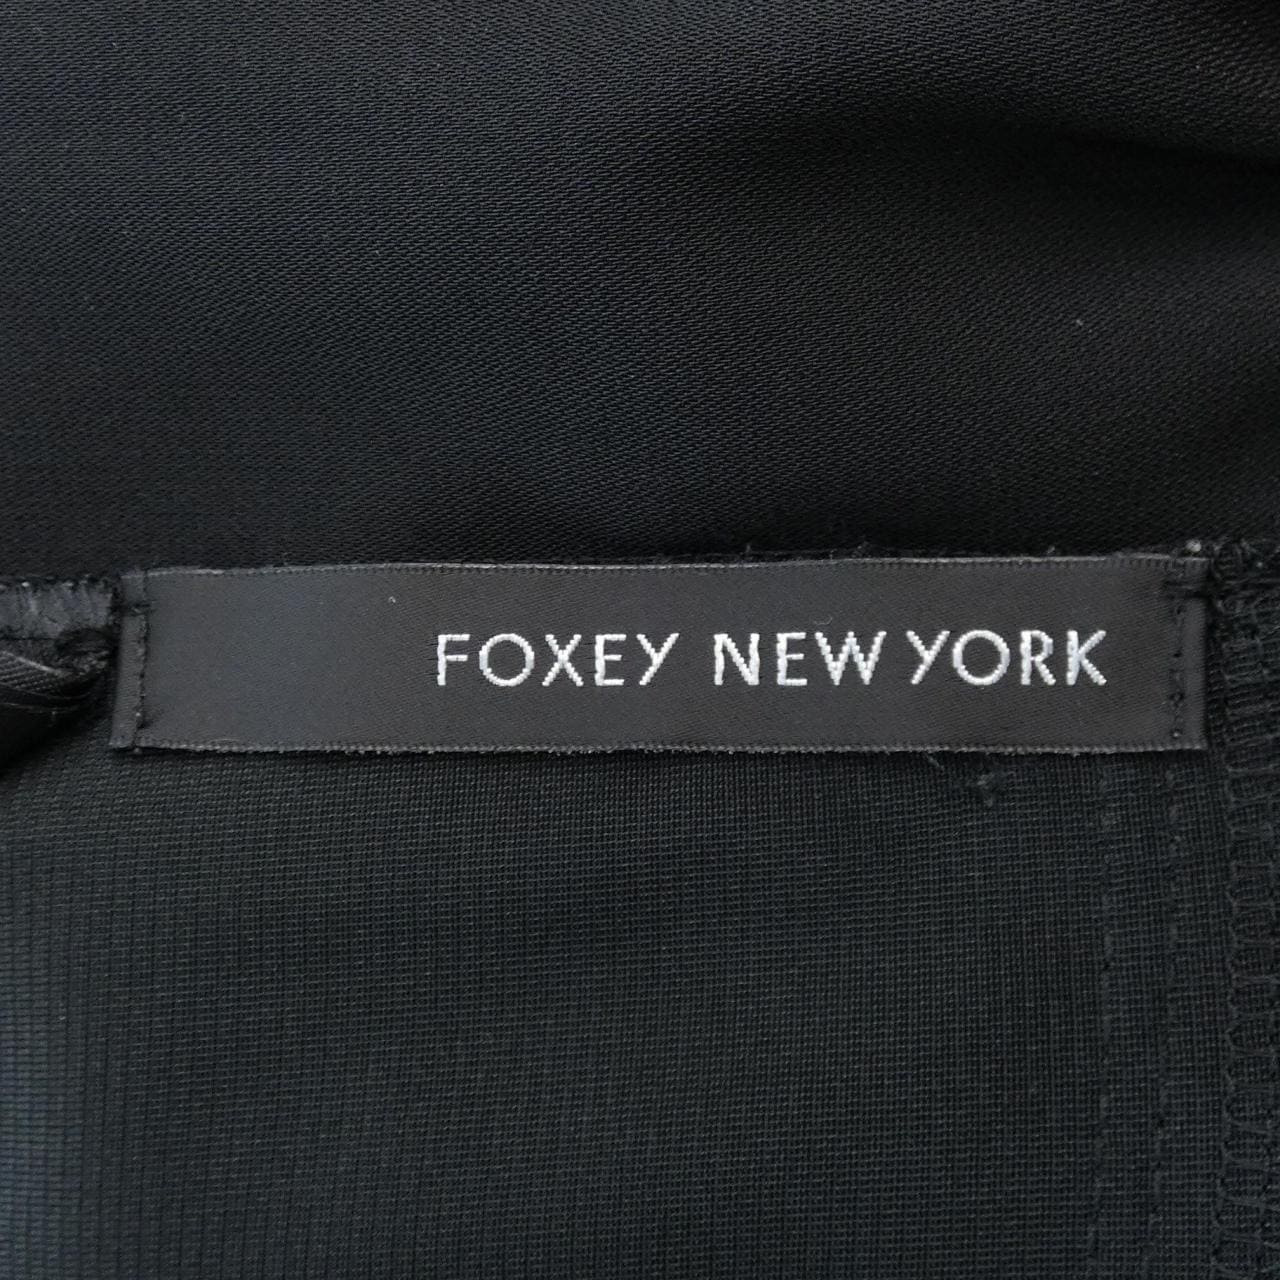 Foxy New York FOXEY NEW YORK skirt